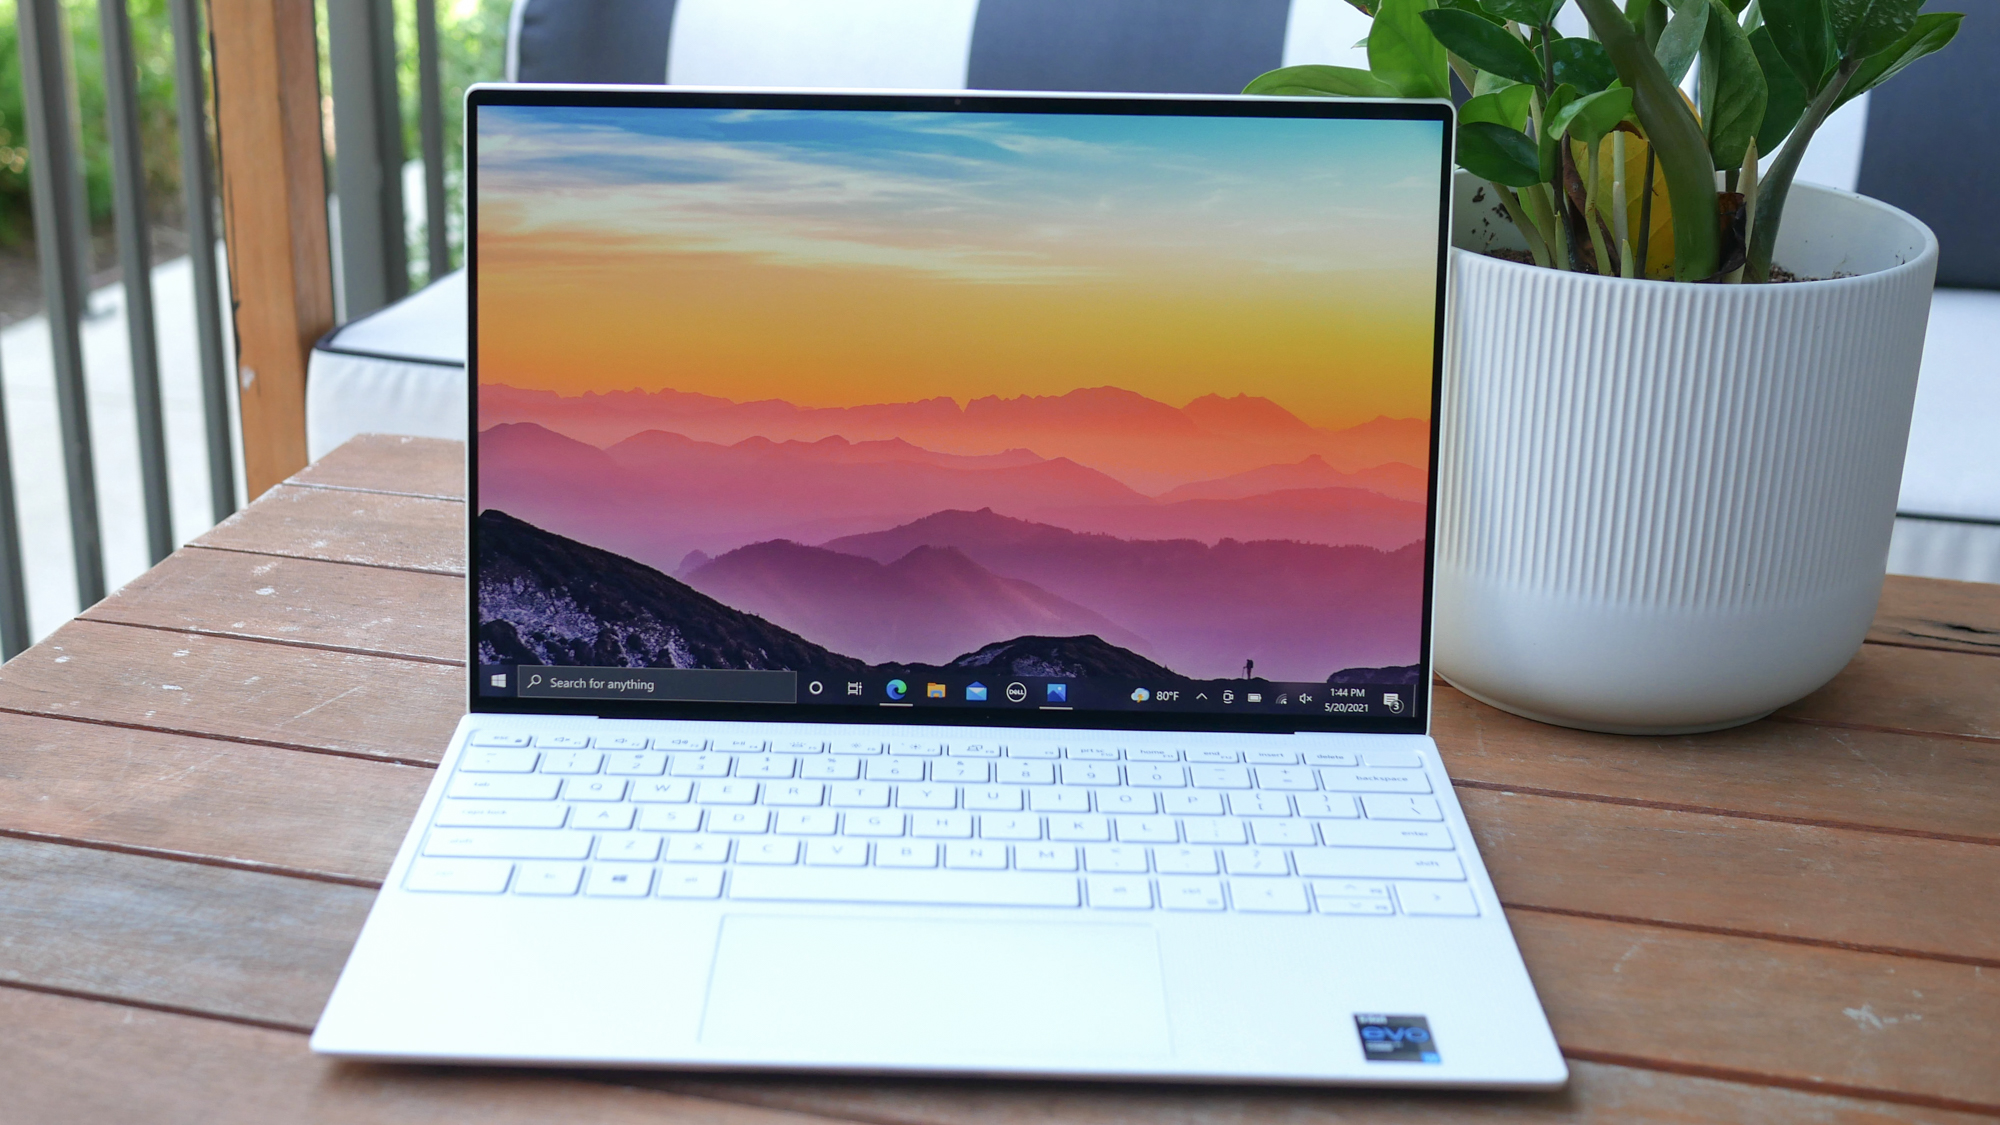 Breathtaking Bargains! : Laptops Under $150